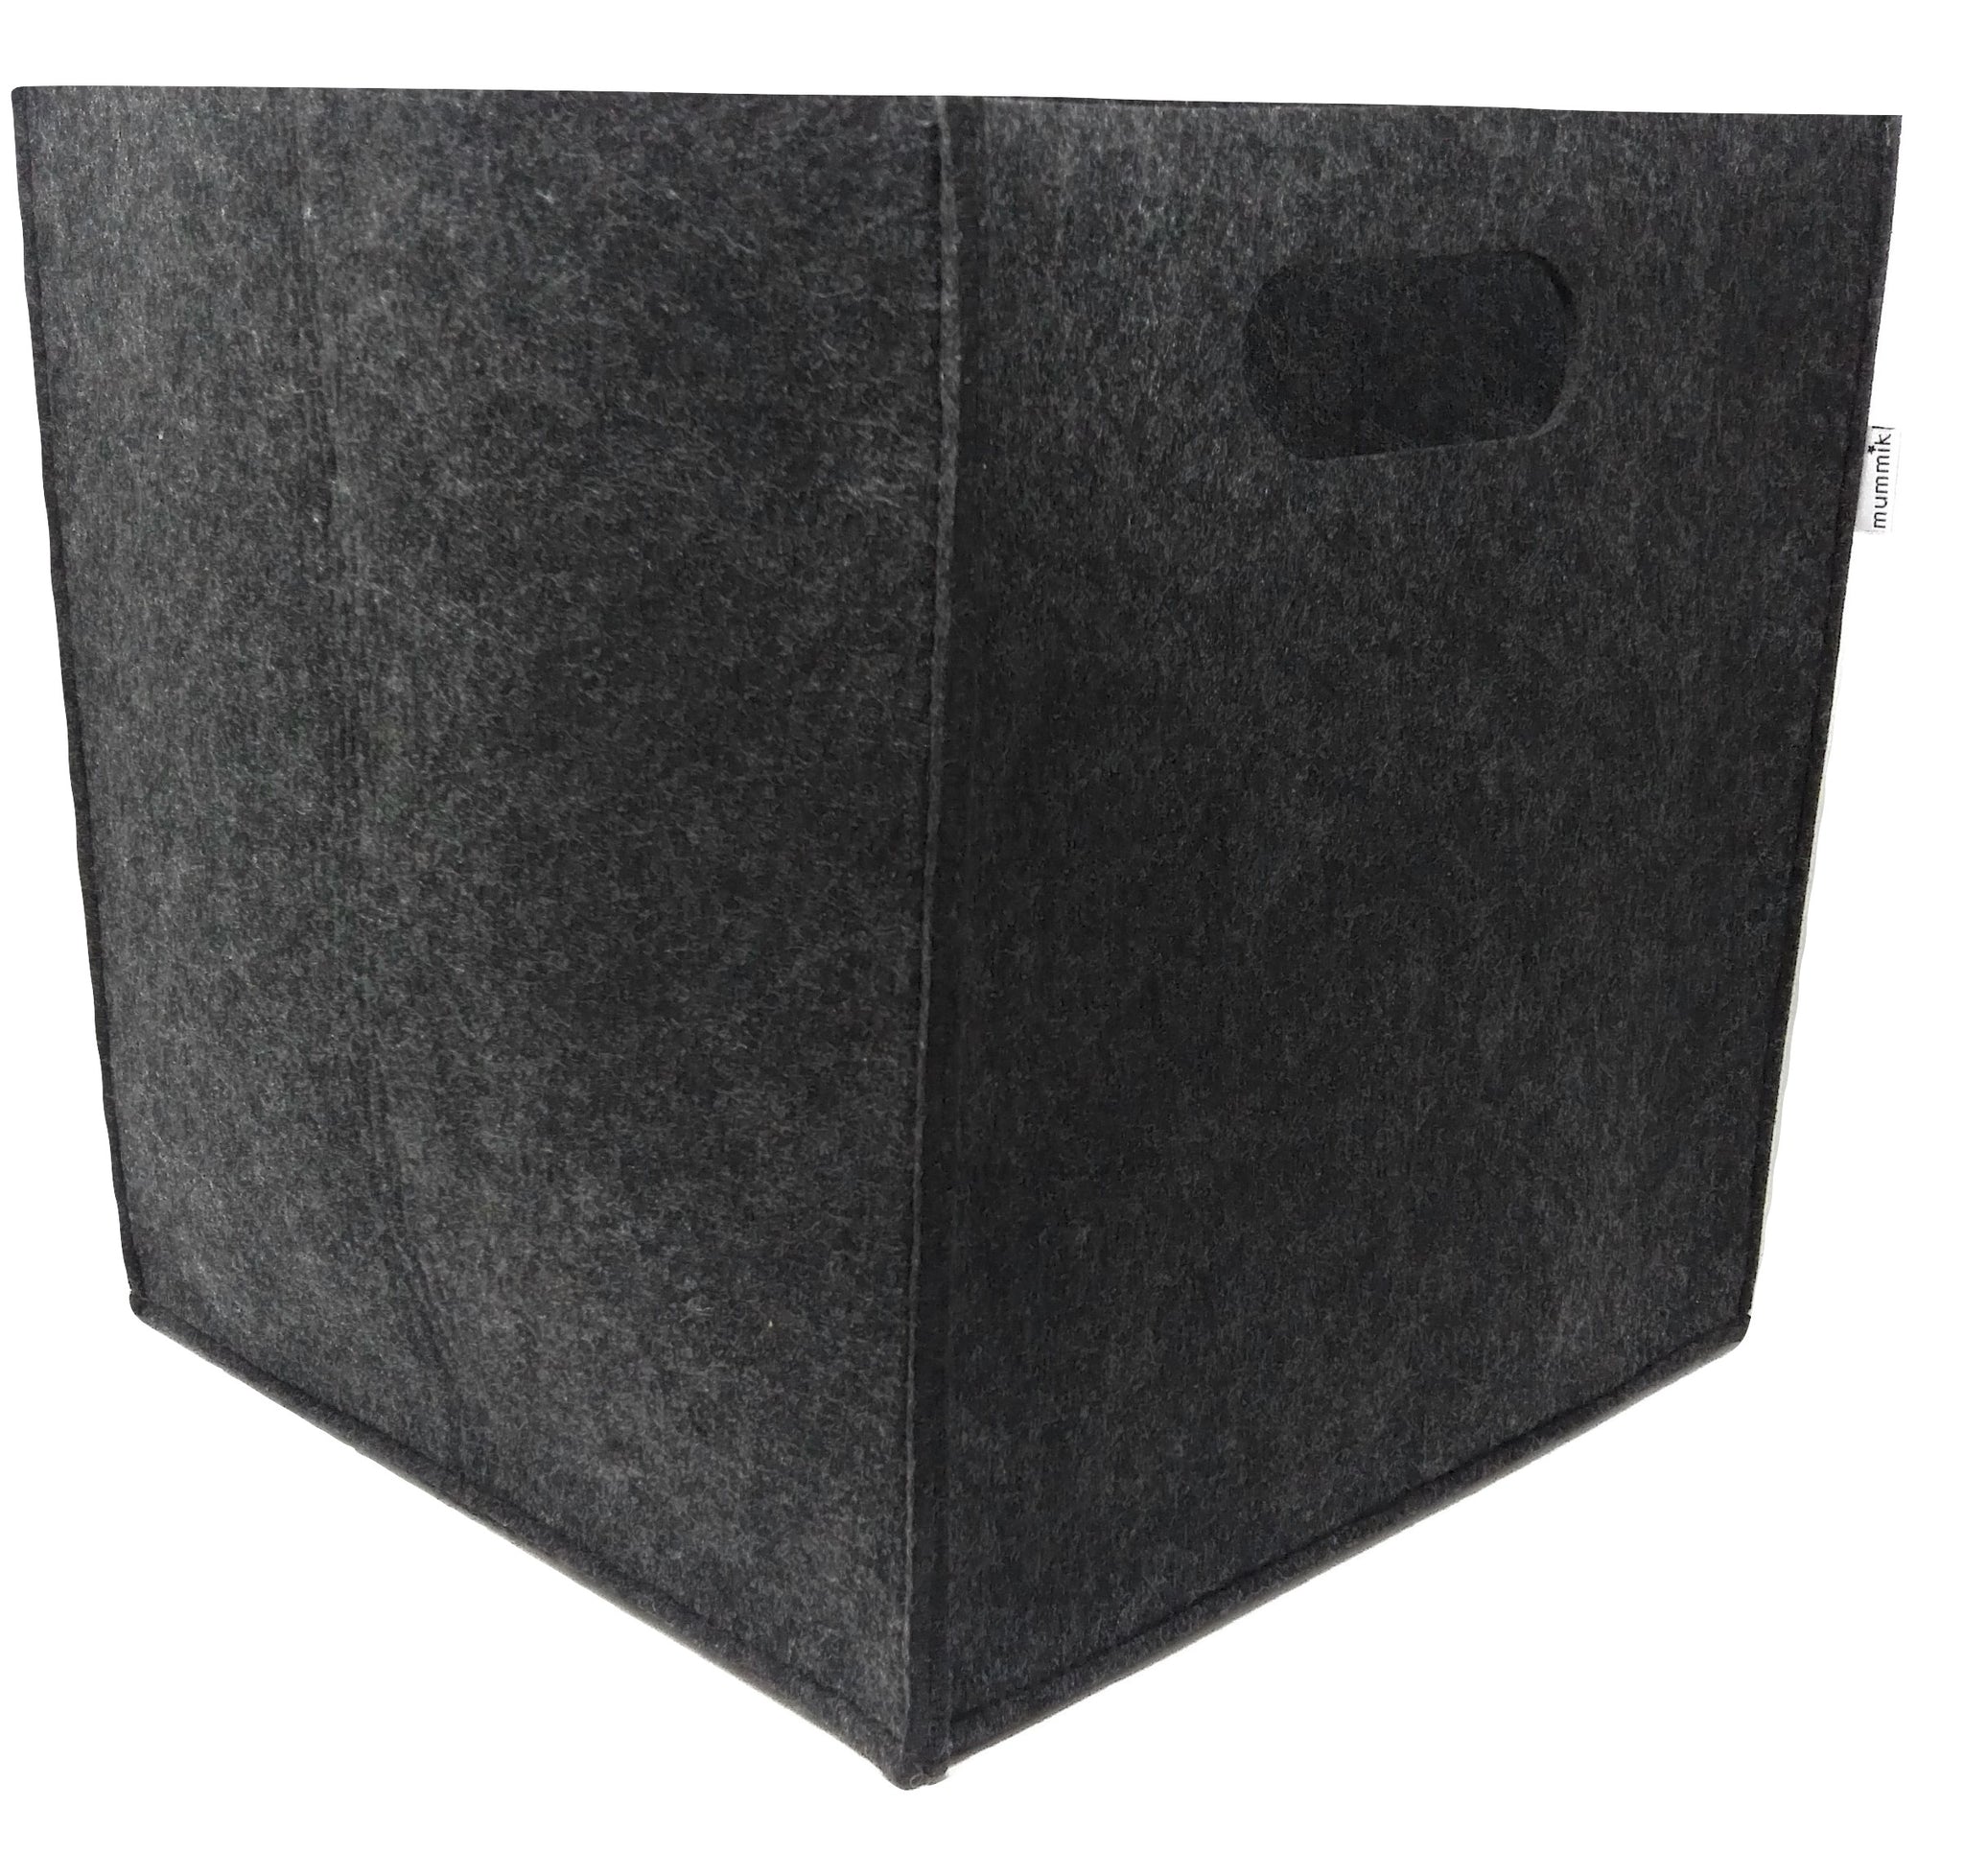 2-set Box Felt Box Storage Box Softbox Storage Basket for Ikea Shelf, Trunk,  Basement Shelf, Shelf Basket, Black 